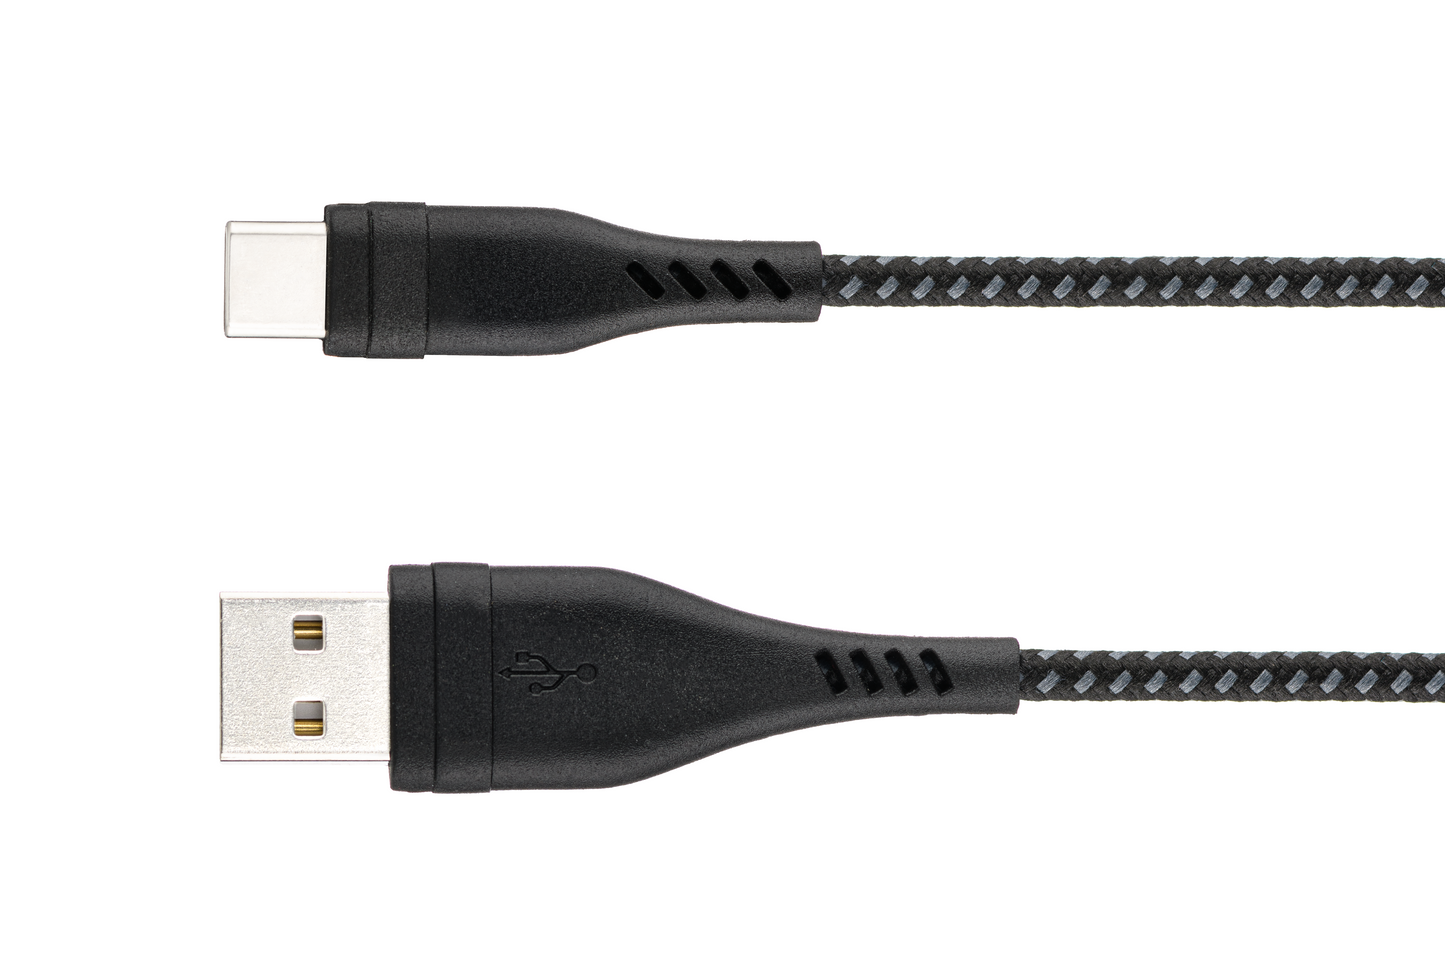 2x MOJOGEAR USB-C naar USB kabel Extra Sterk [DUOPACK]